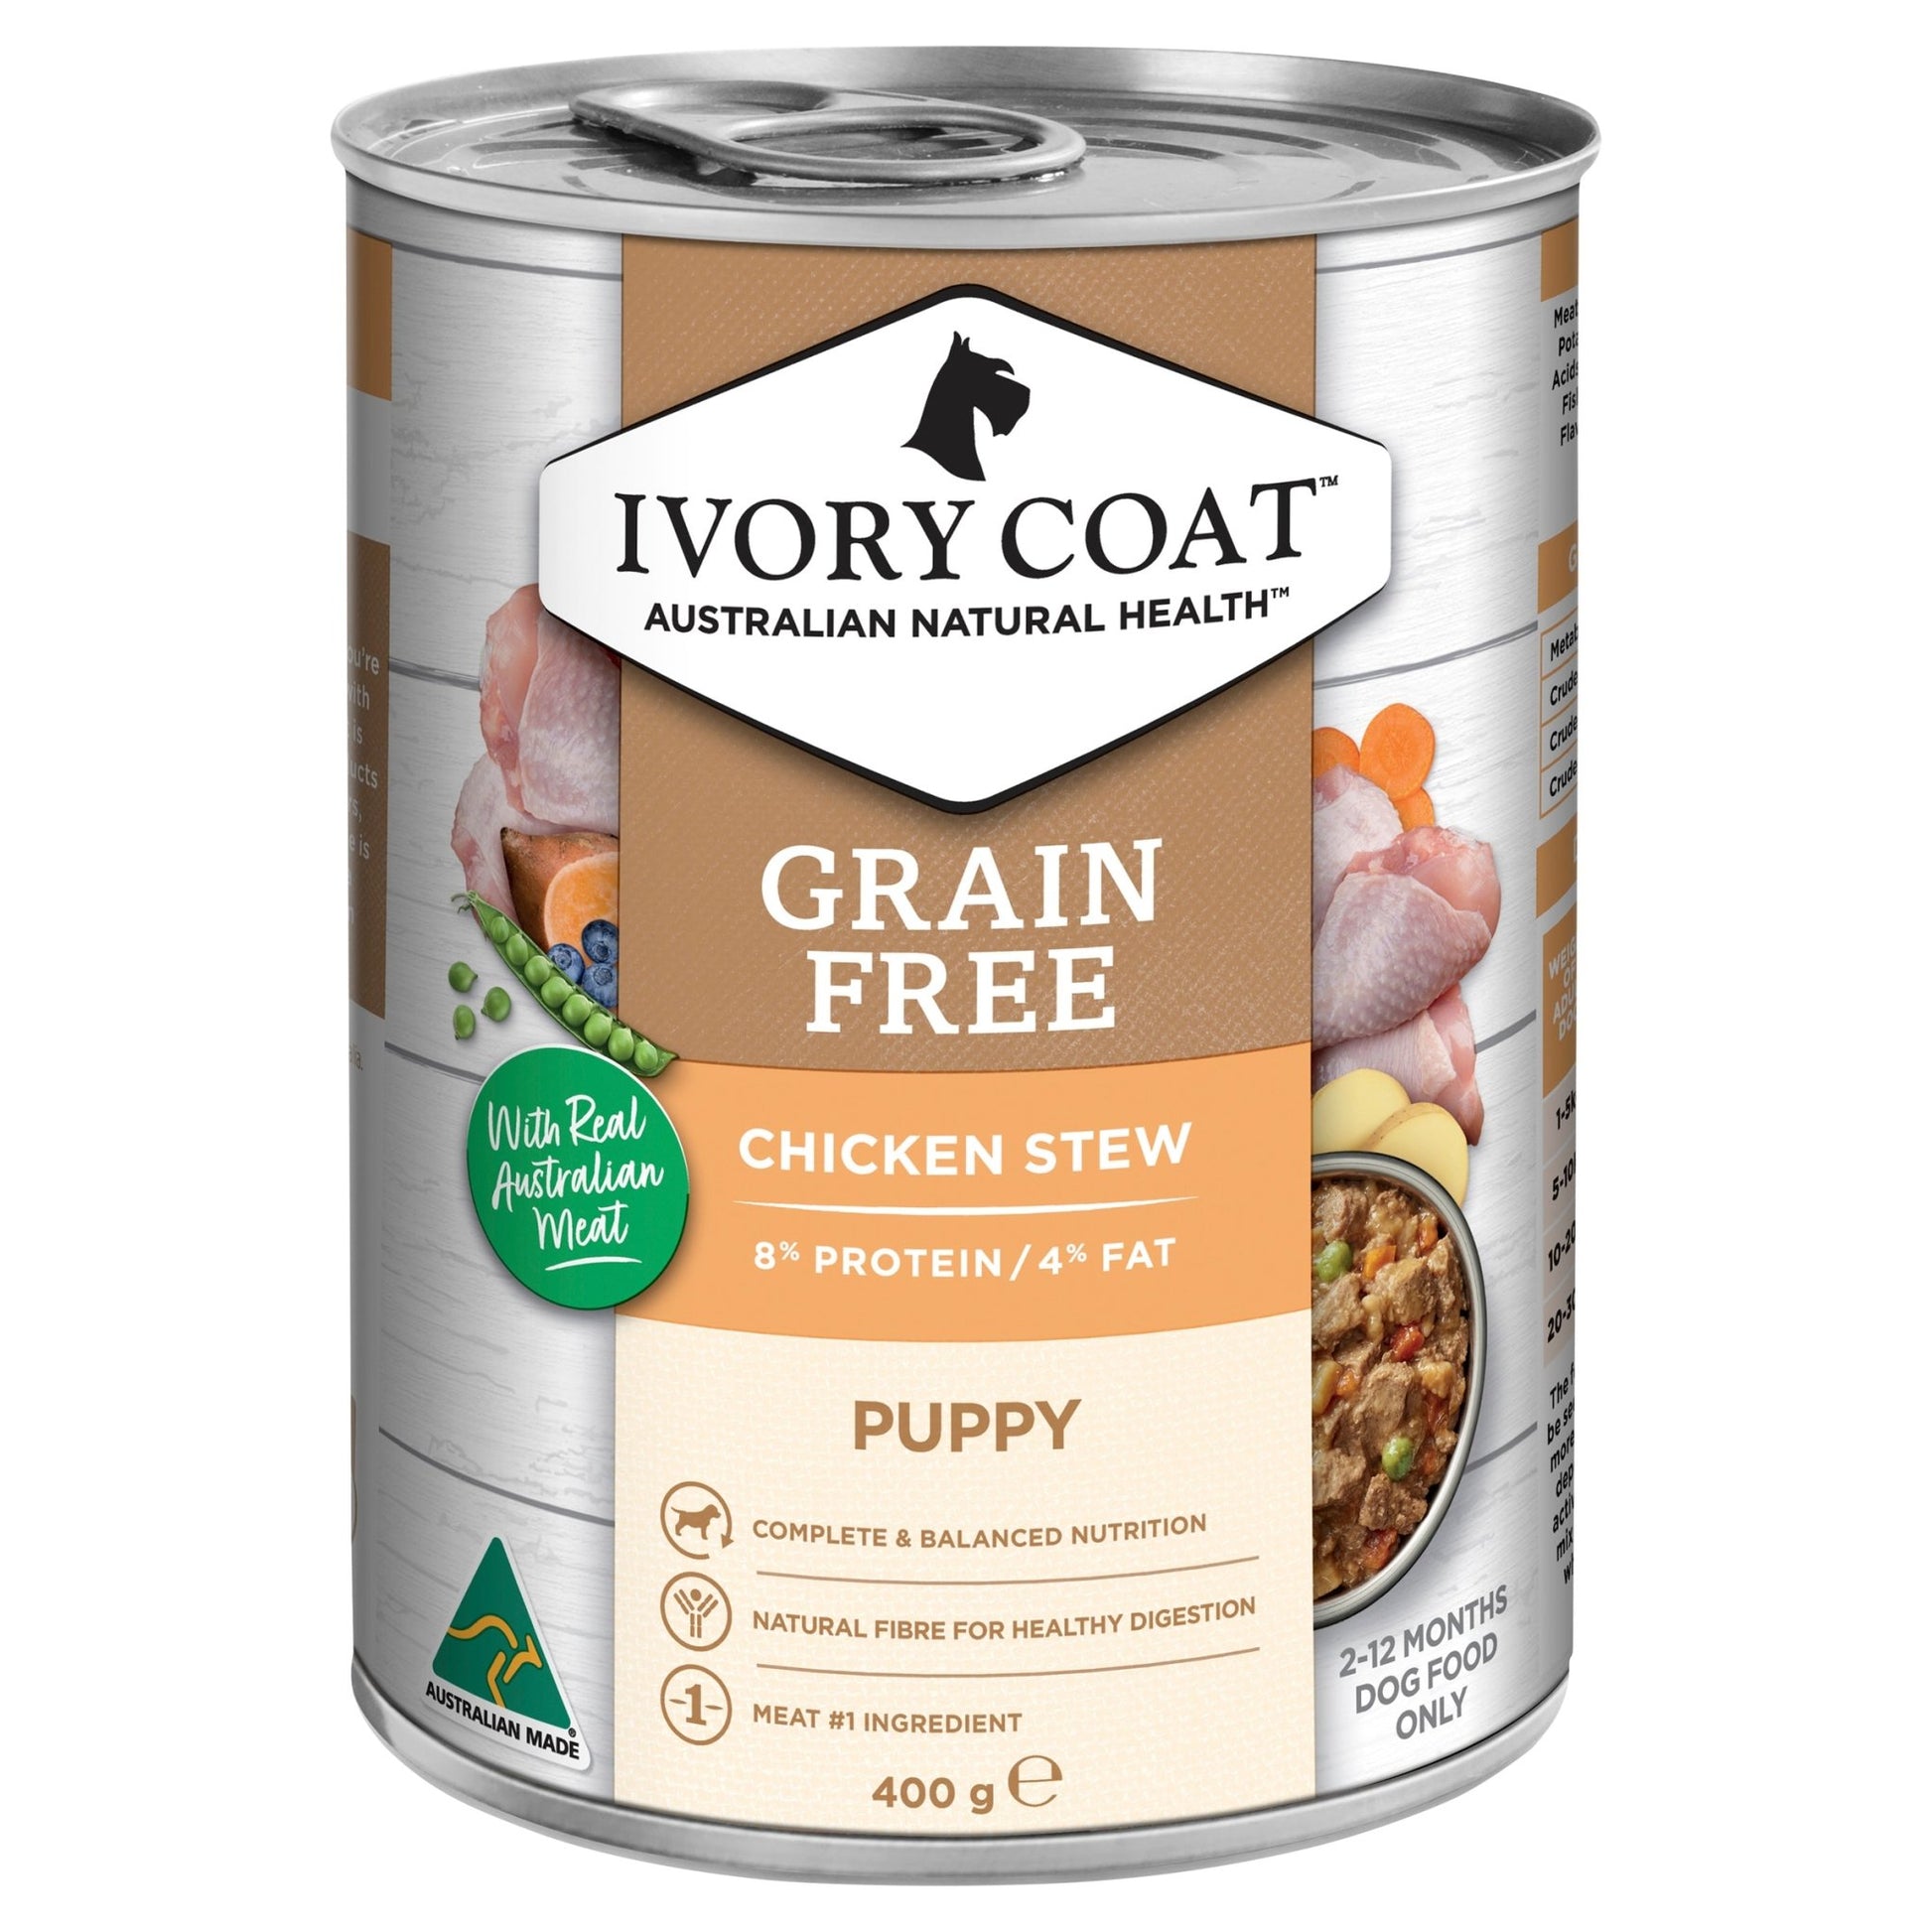 Ivory Coat Grain Free Wet Puppy Food Chicken Stew 12x400g - Woonona Petfood & Produce